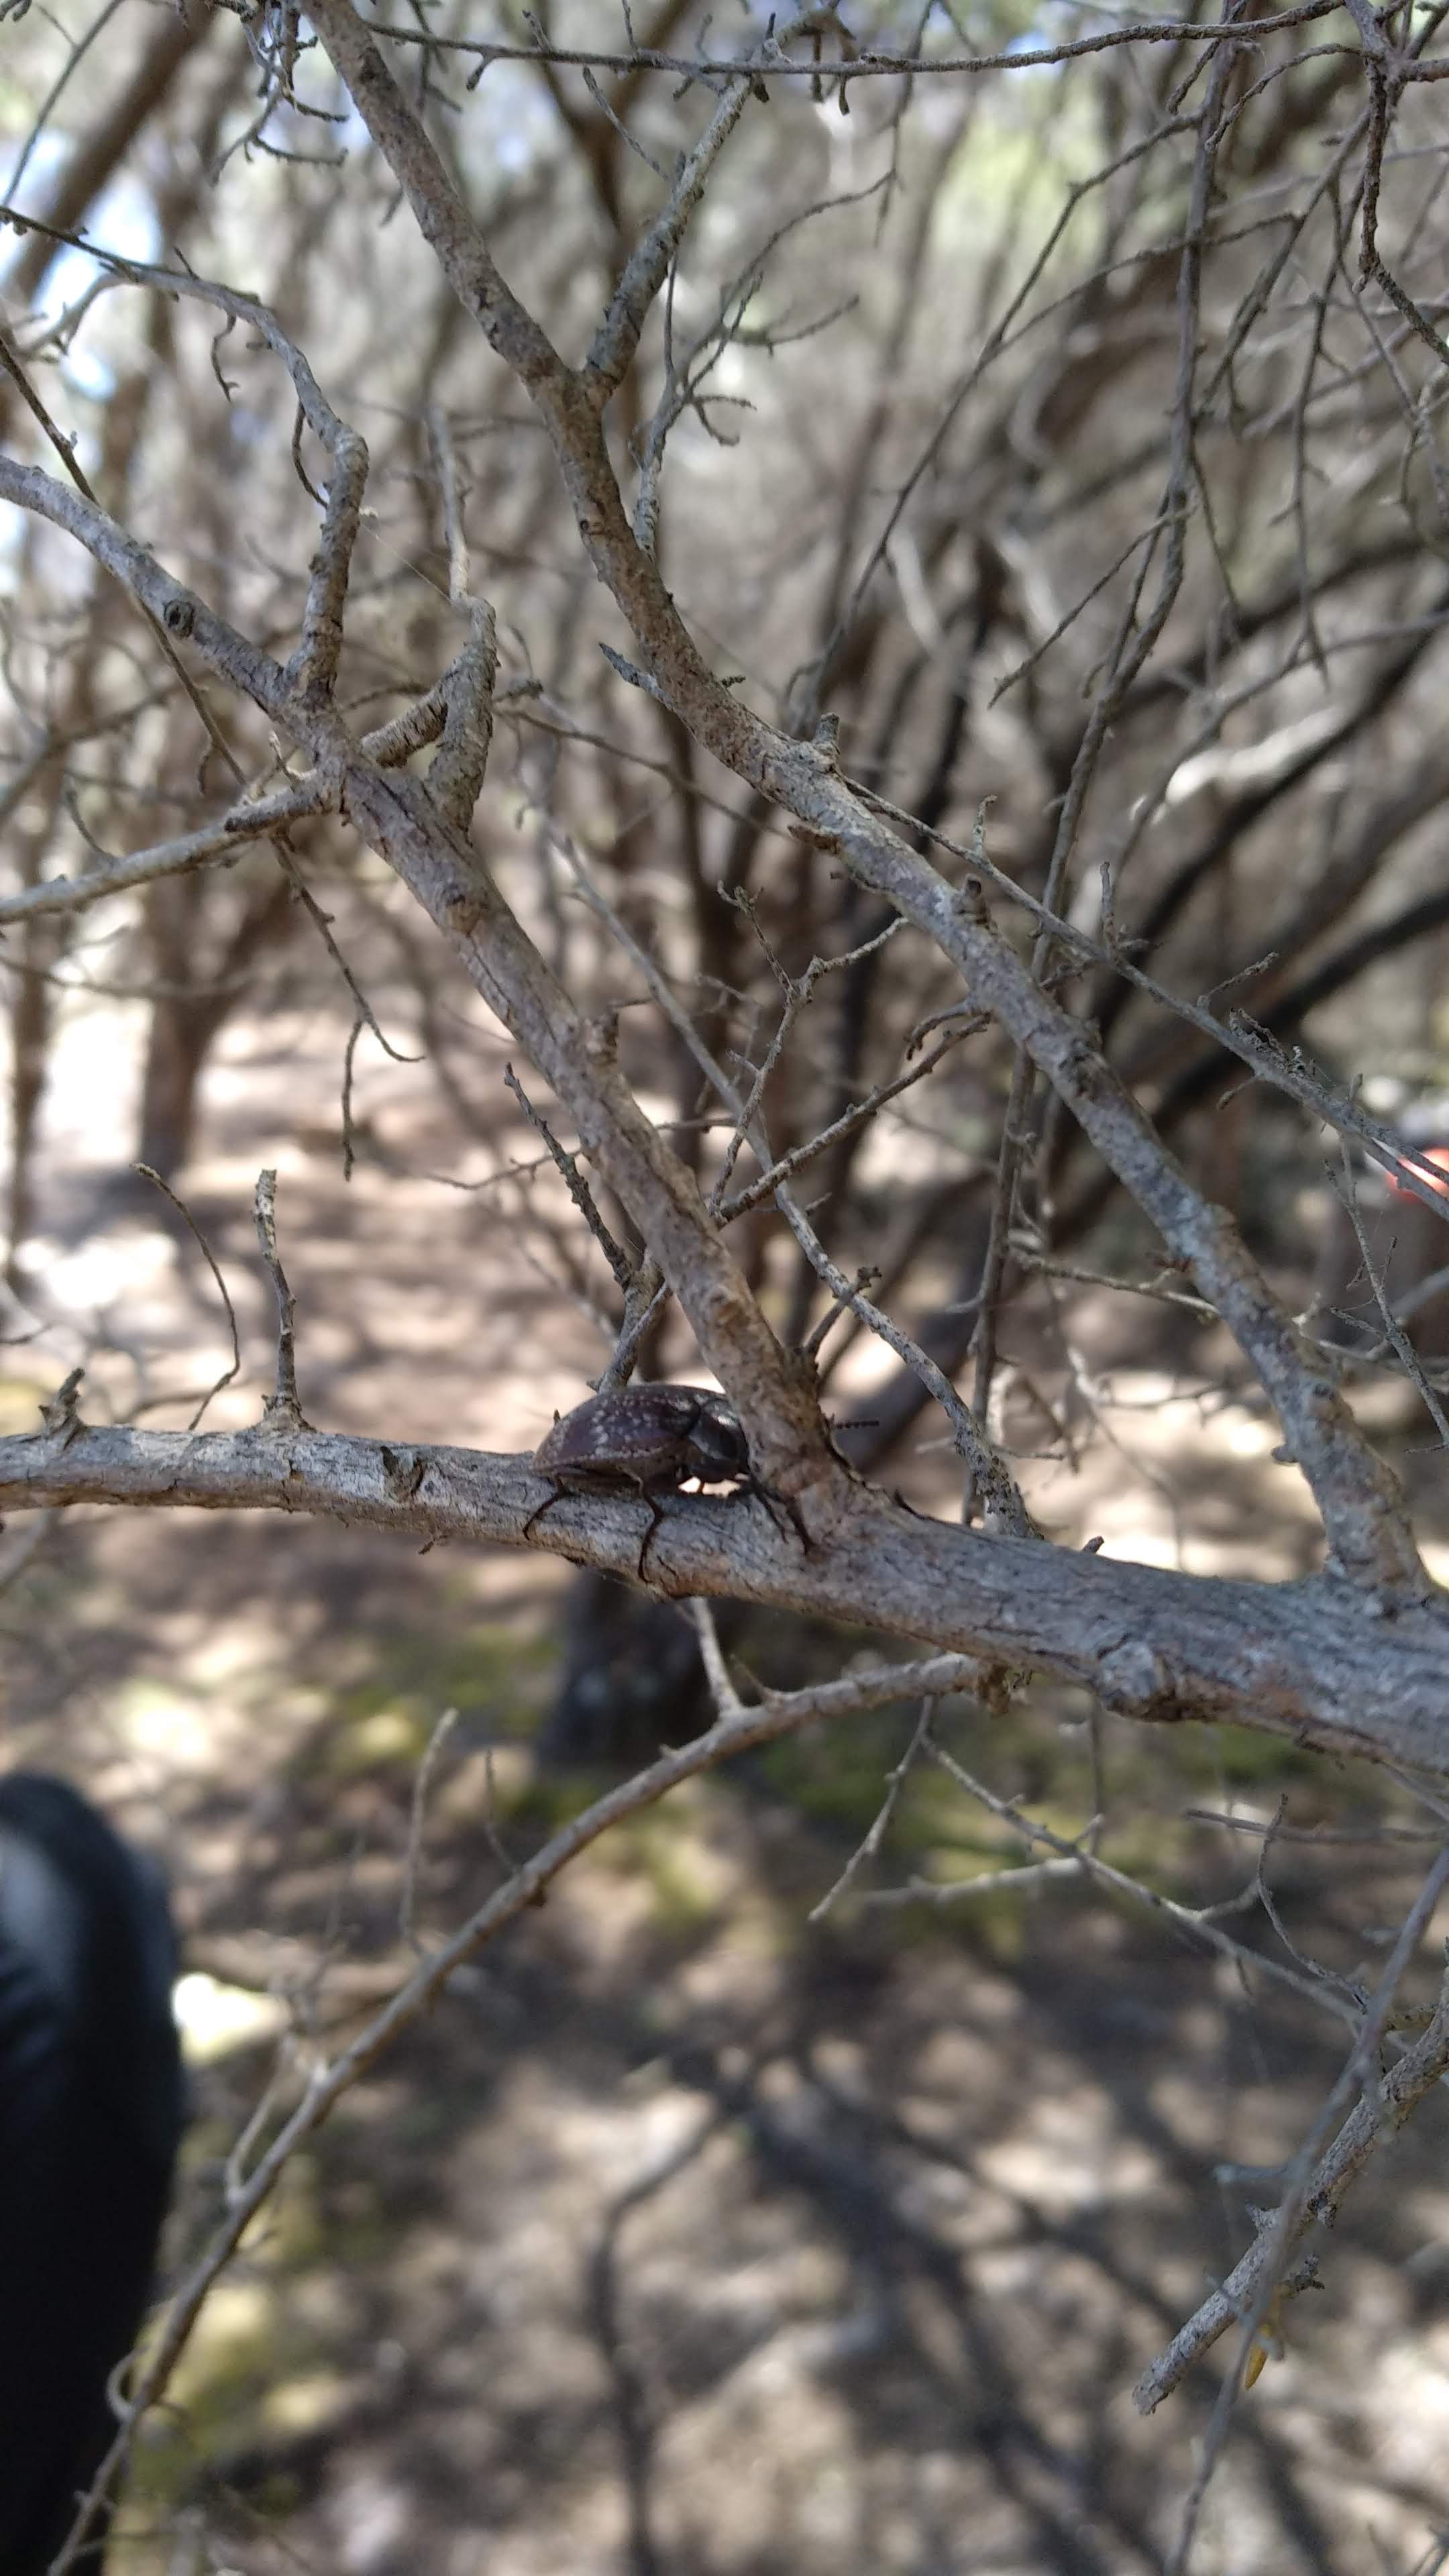 Darkling beetle (lepispilus sulcicollis)